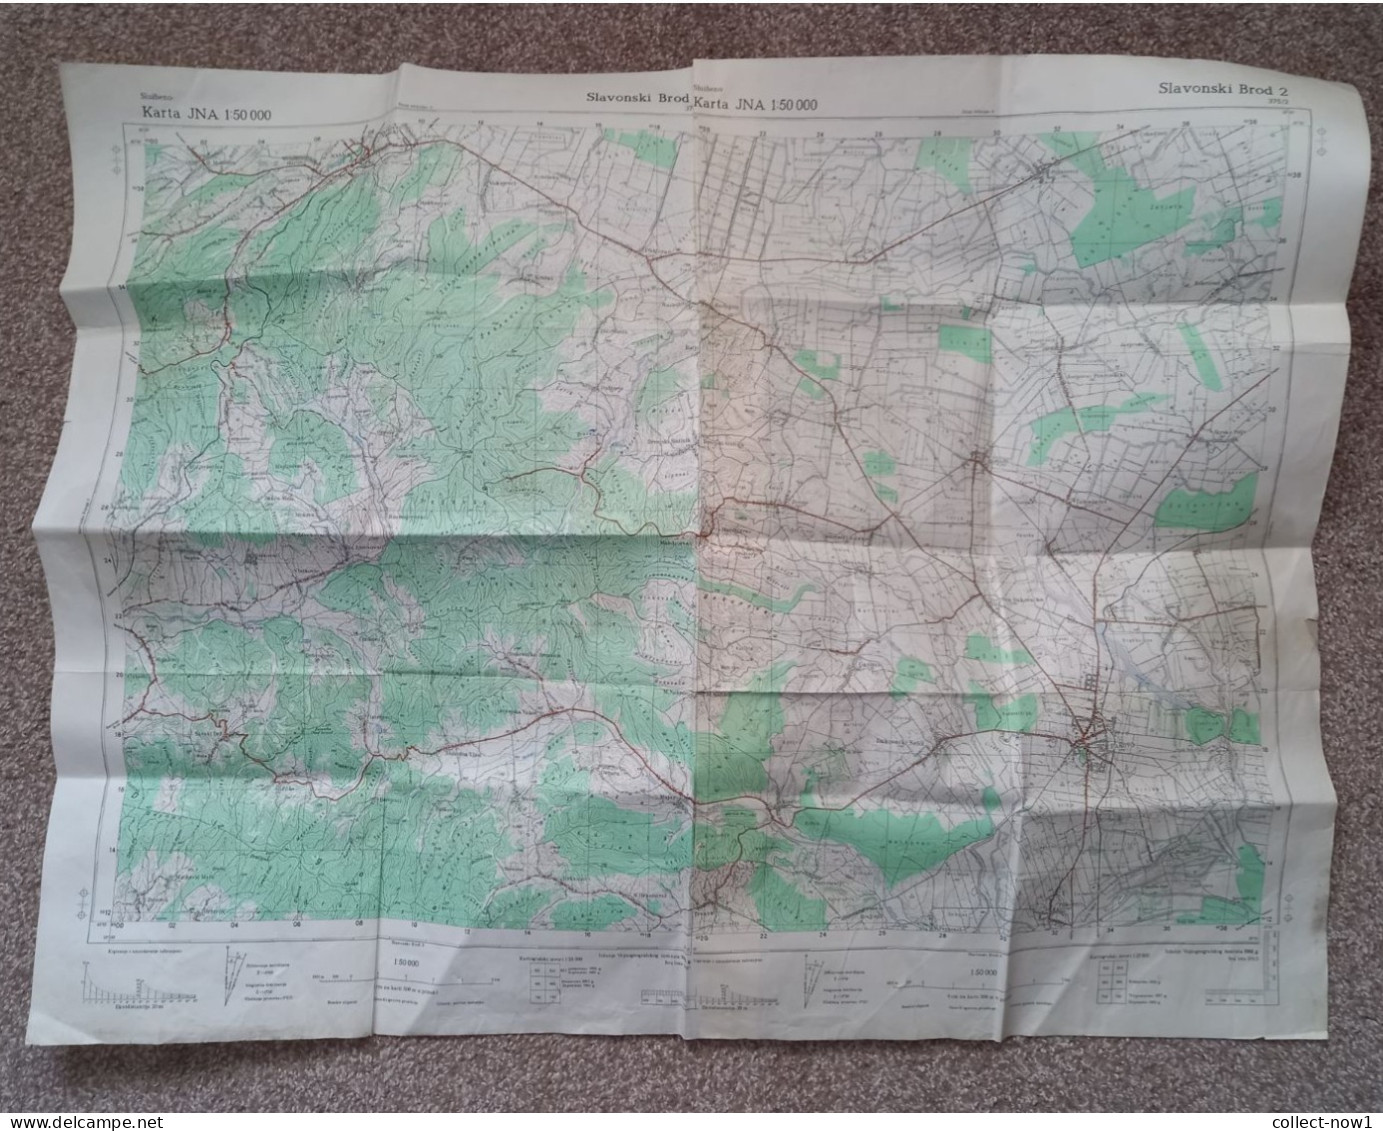 Topographical Maps - Croatia / Slavonski Brod - JNA YUGOSLAVIA ARMY MAP MILITARY CHART PLAN - Topographische Kaarten